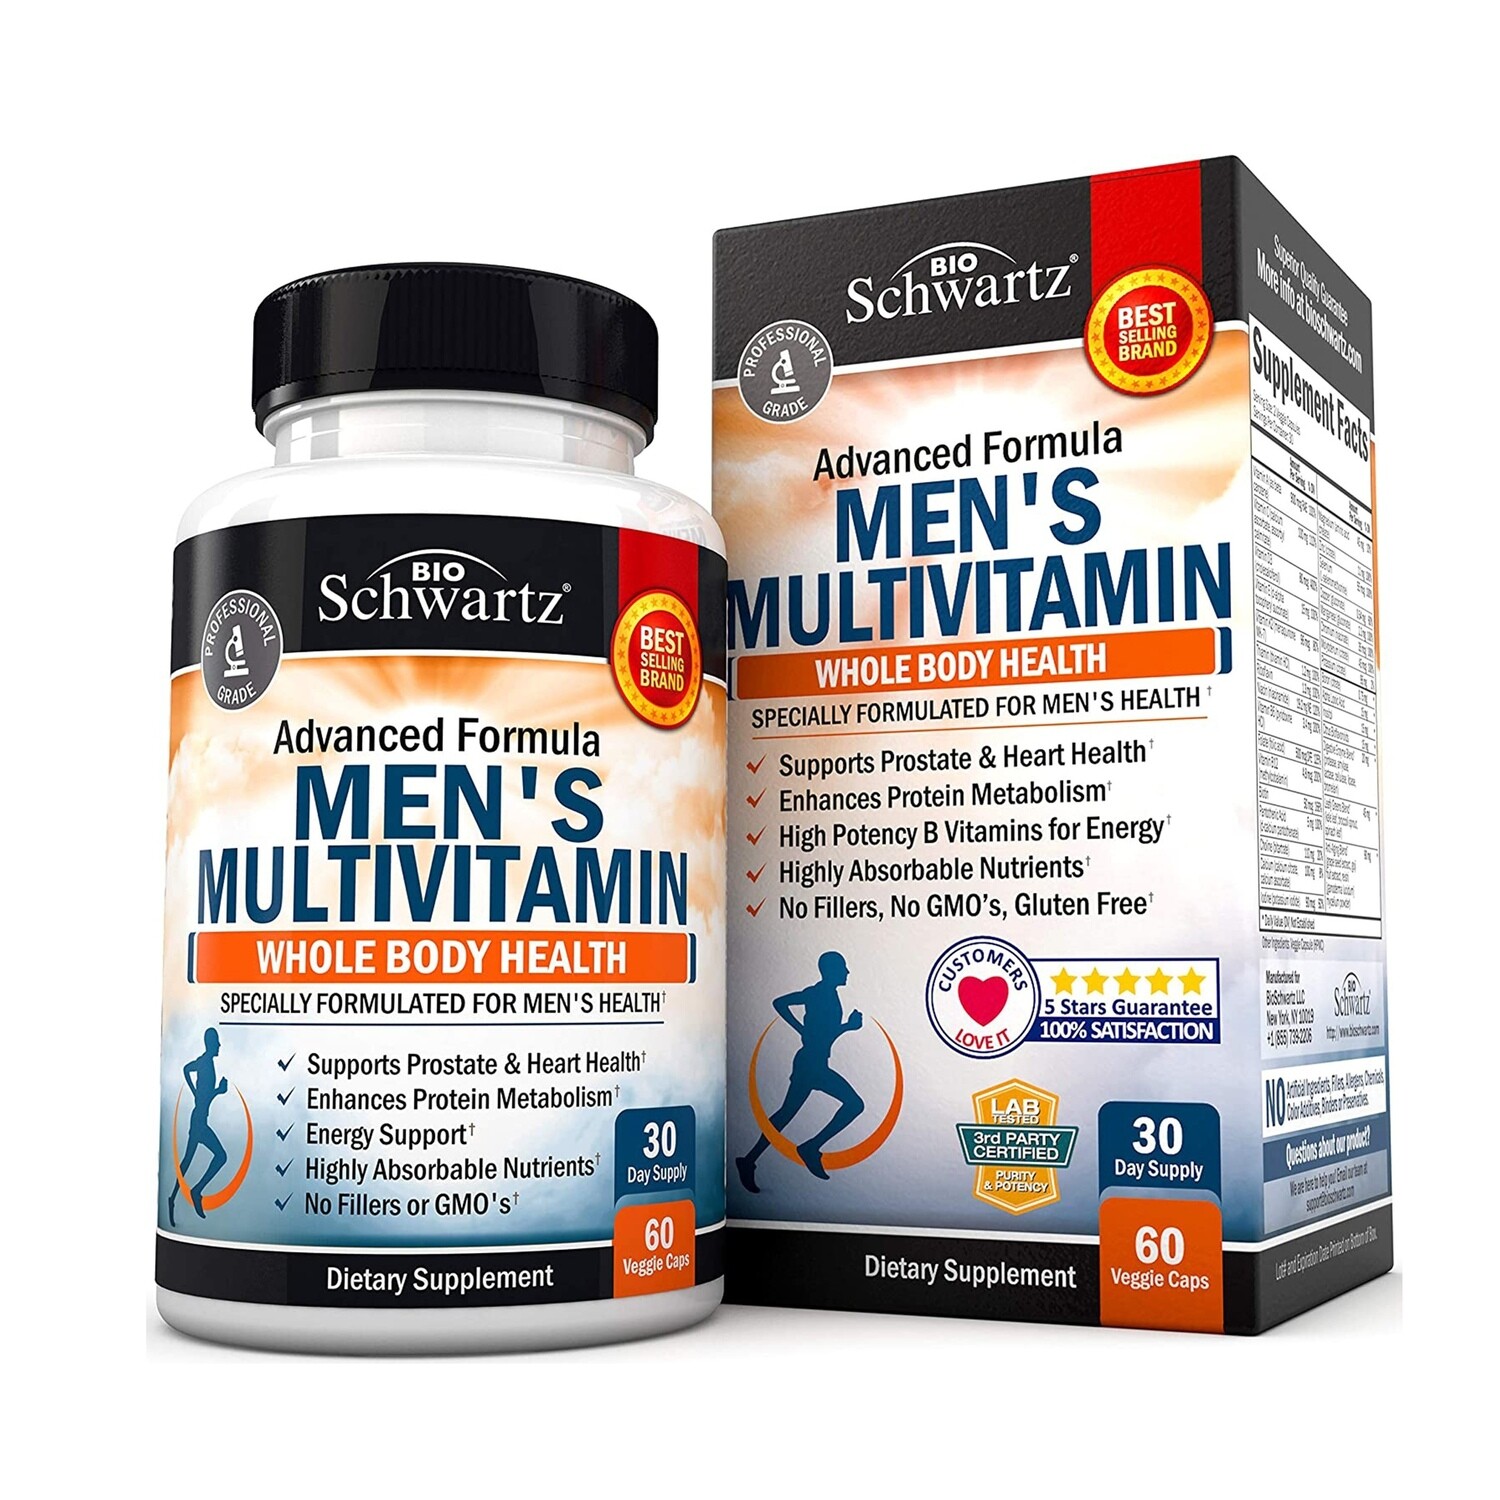 Men's Multivitamin (мужские мультивитамины) - 60 Капсул от BioSchwartz (Био Шварц)